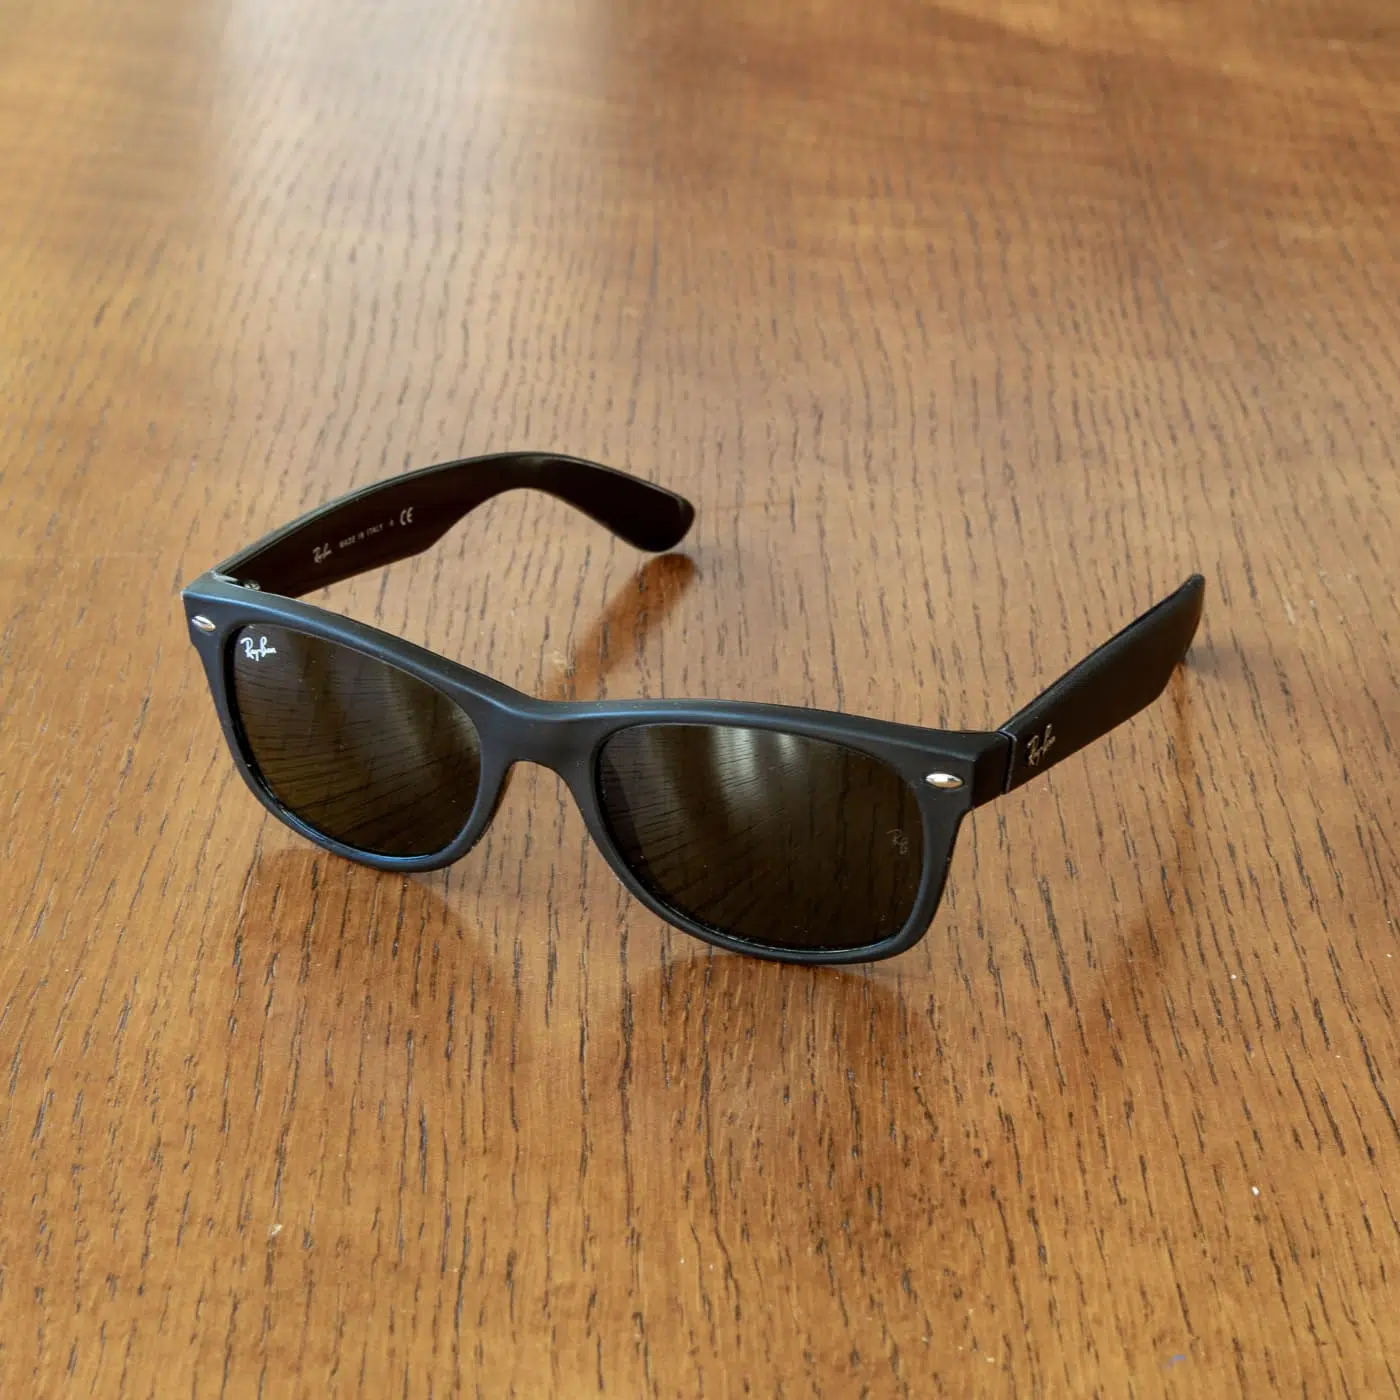 Kate Middleton's Ray-Ban New Wayfarer Sunglasses in Black/Green